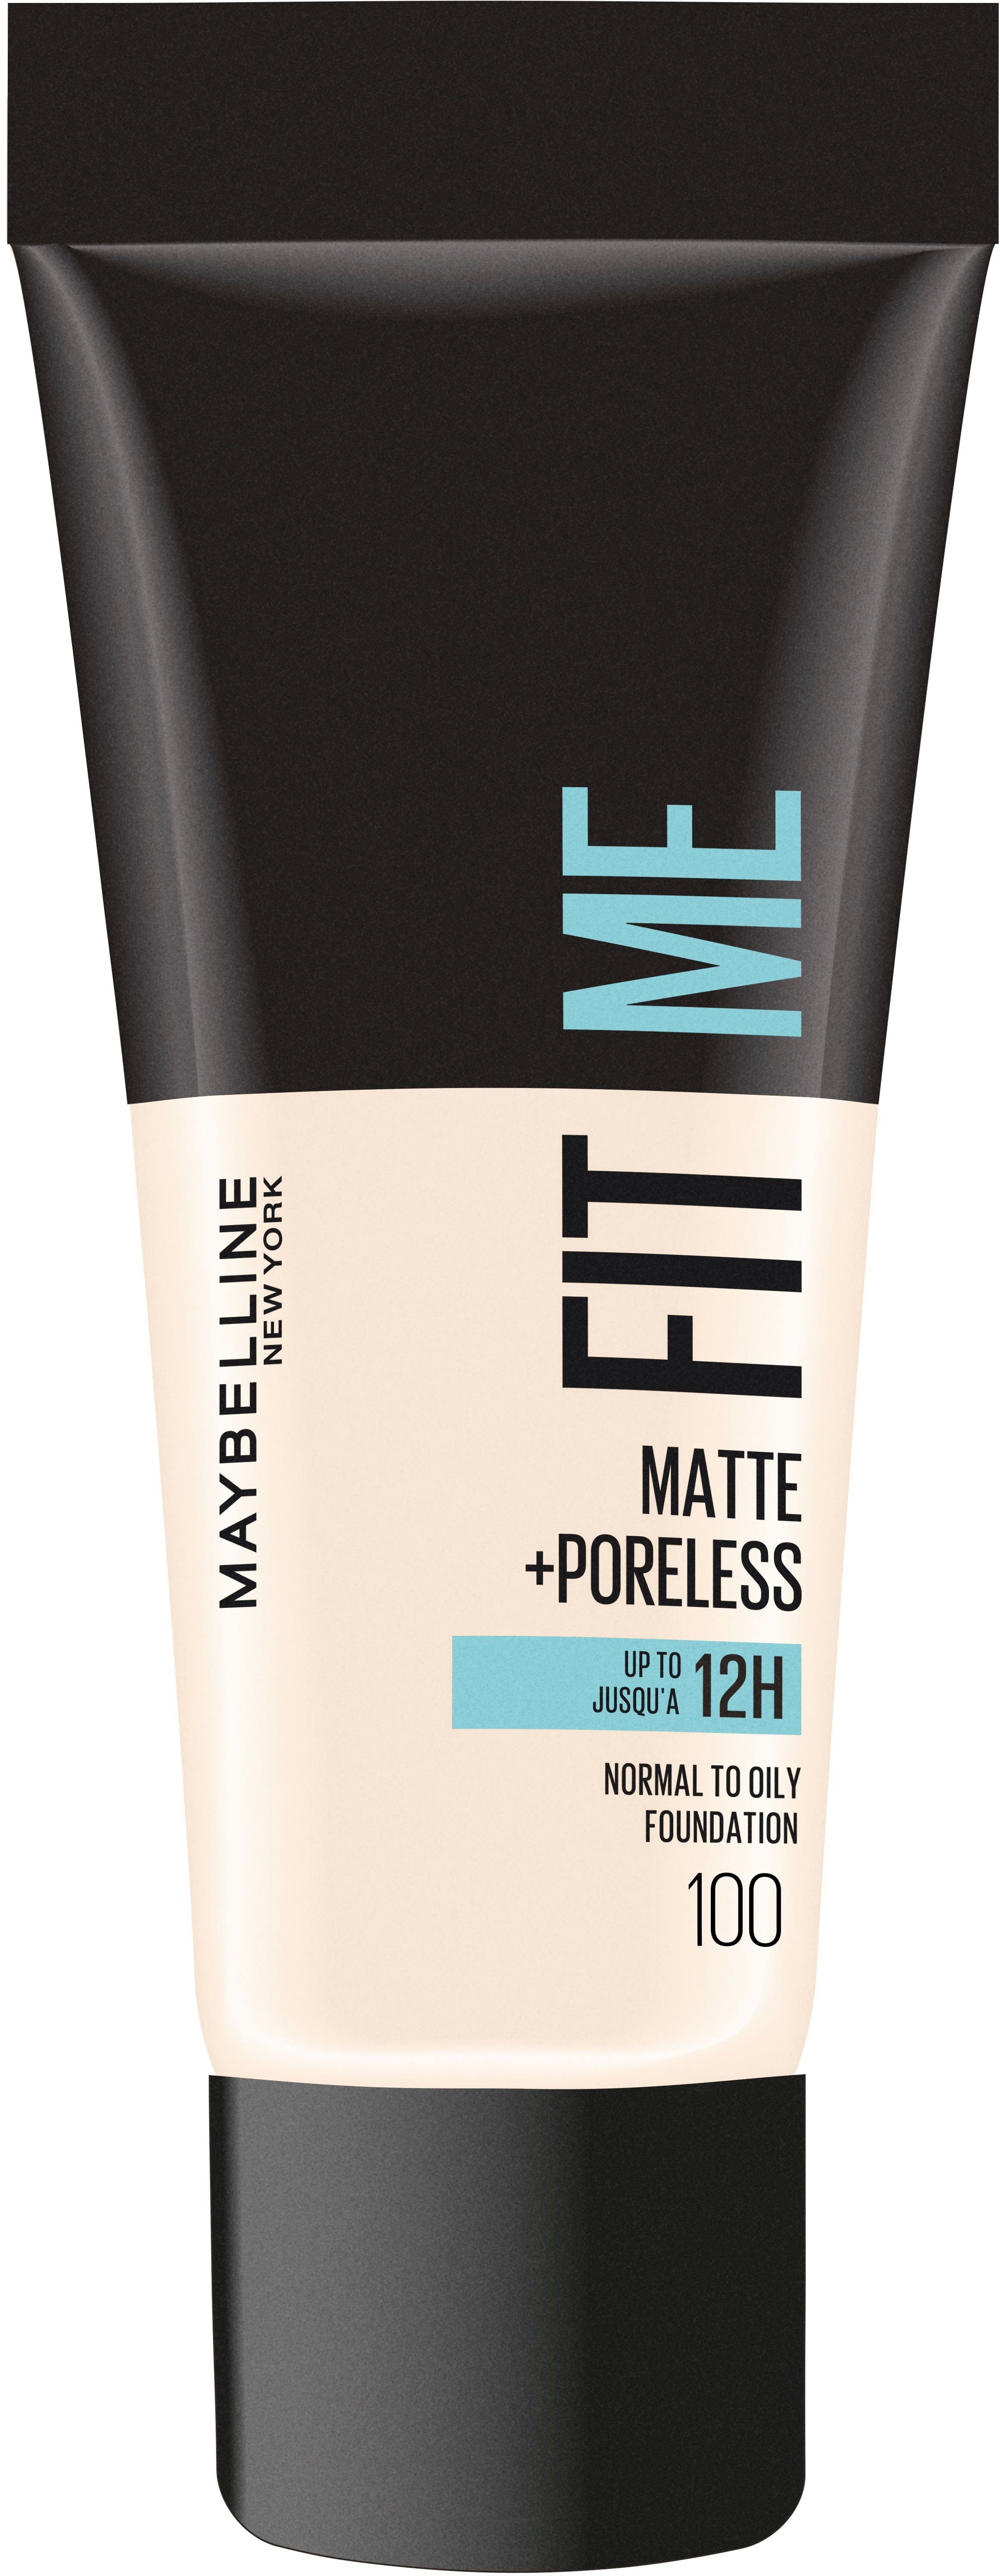 MAYBELLINE NEW YORK Foundation + Poreless York Me! Maybelline Fit Make-Up New Matte